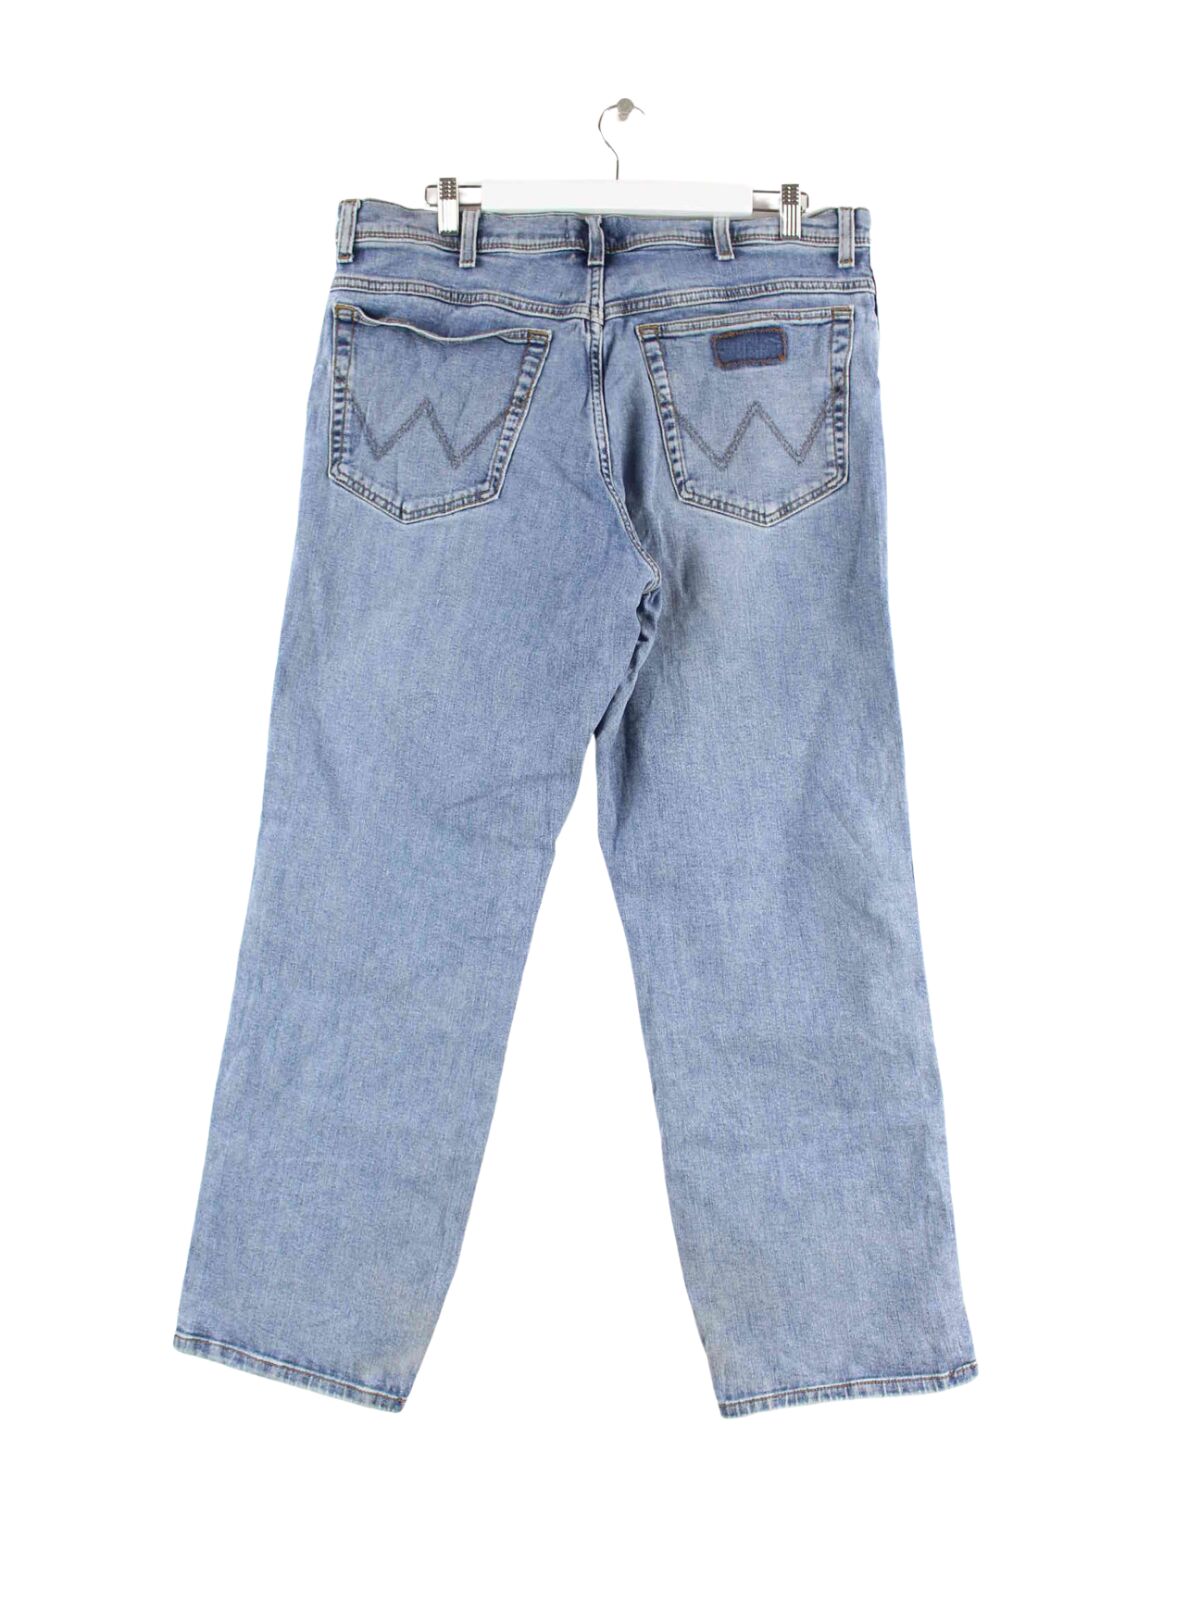 Wrangler Texas Jeans Blau W38 L32 (back image)